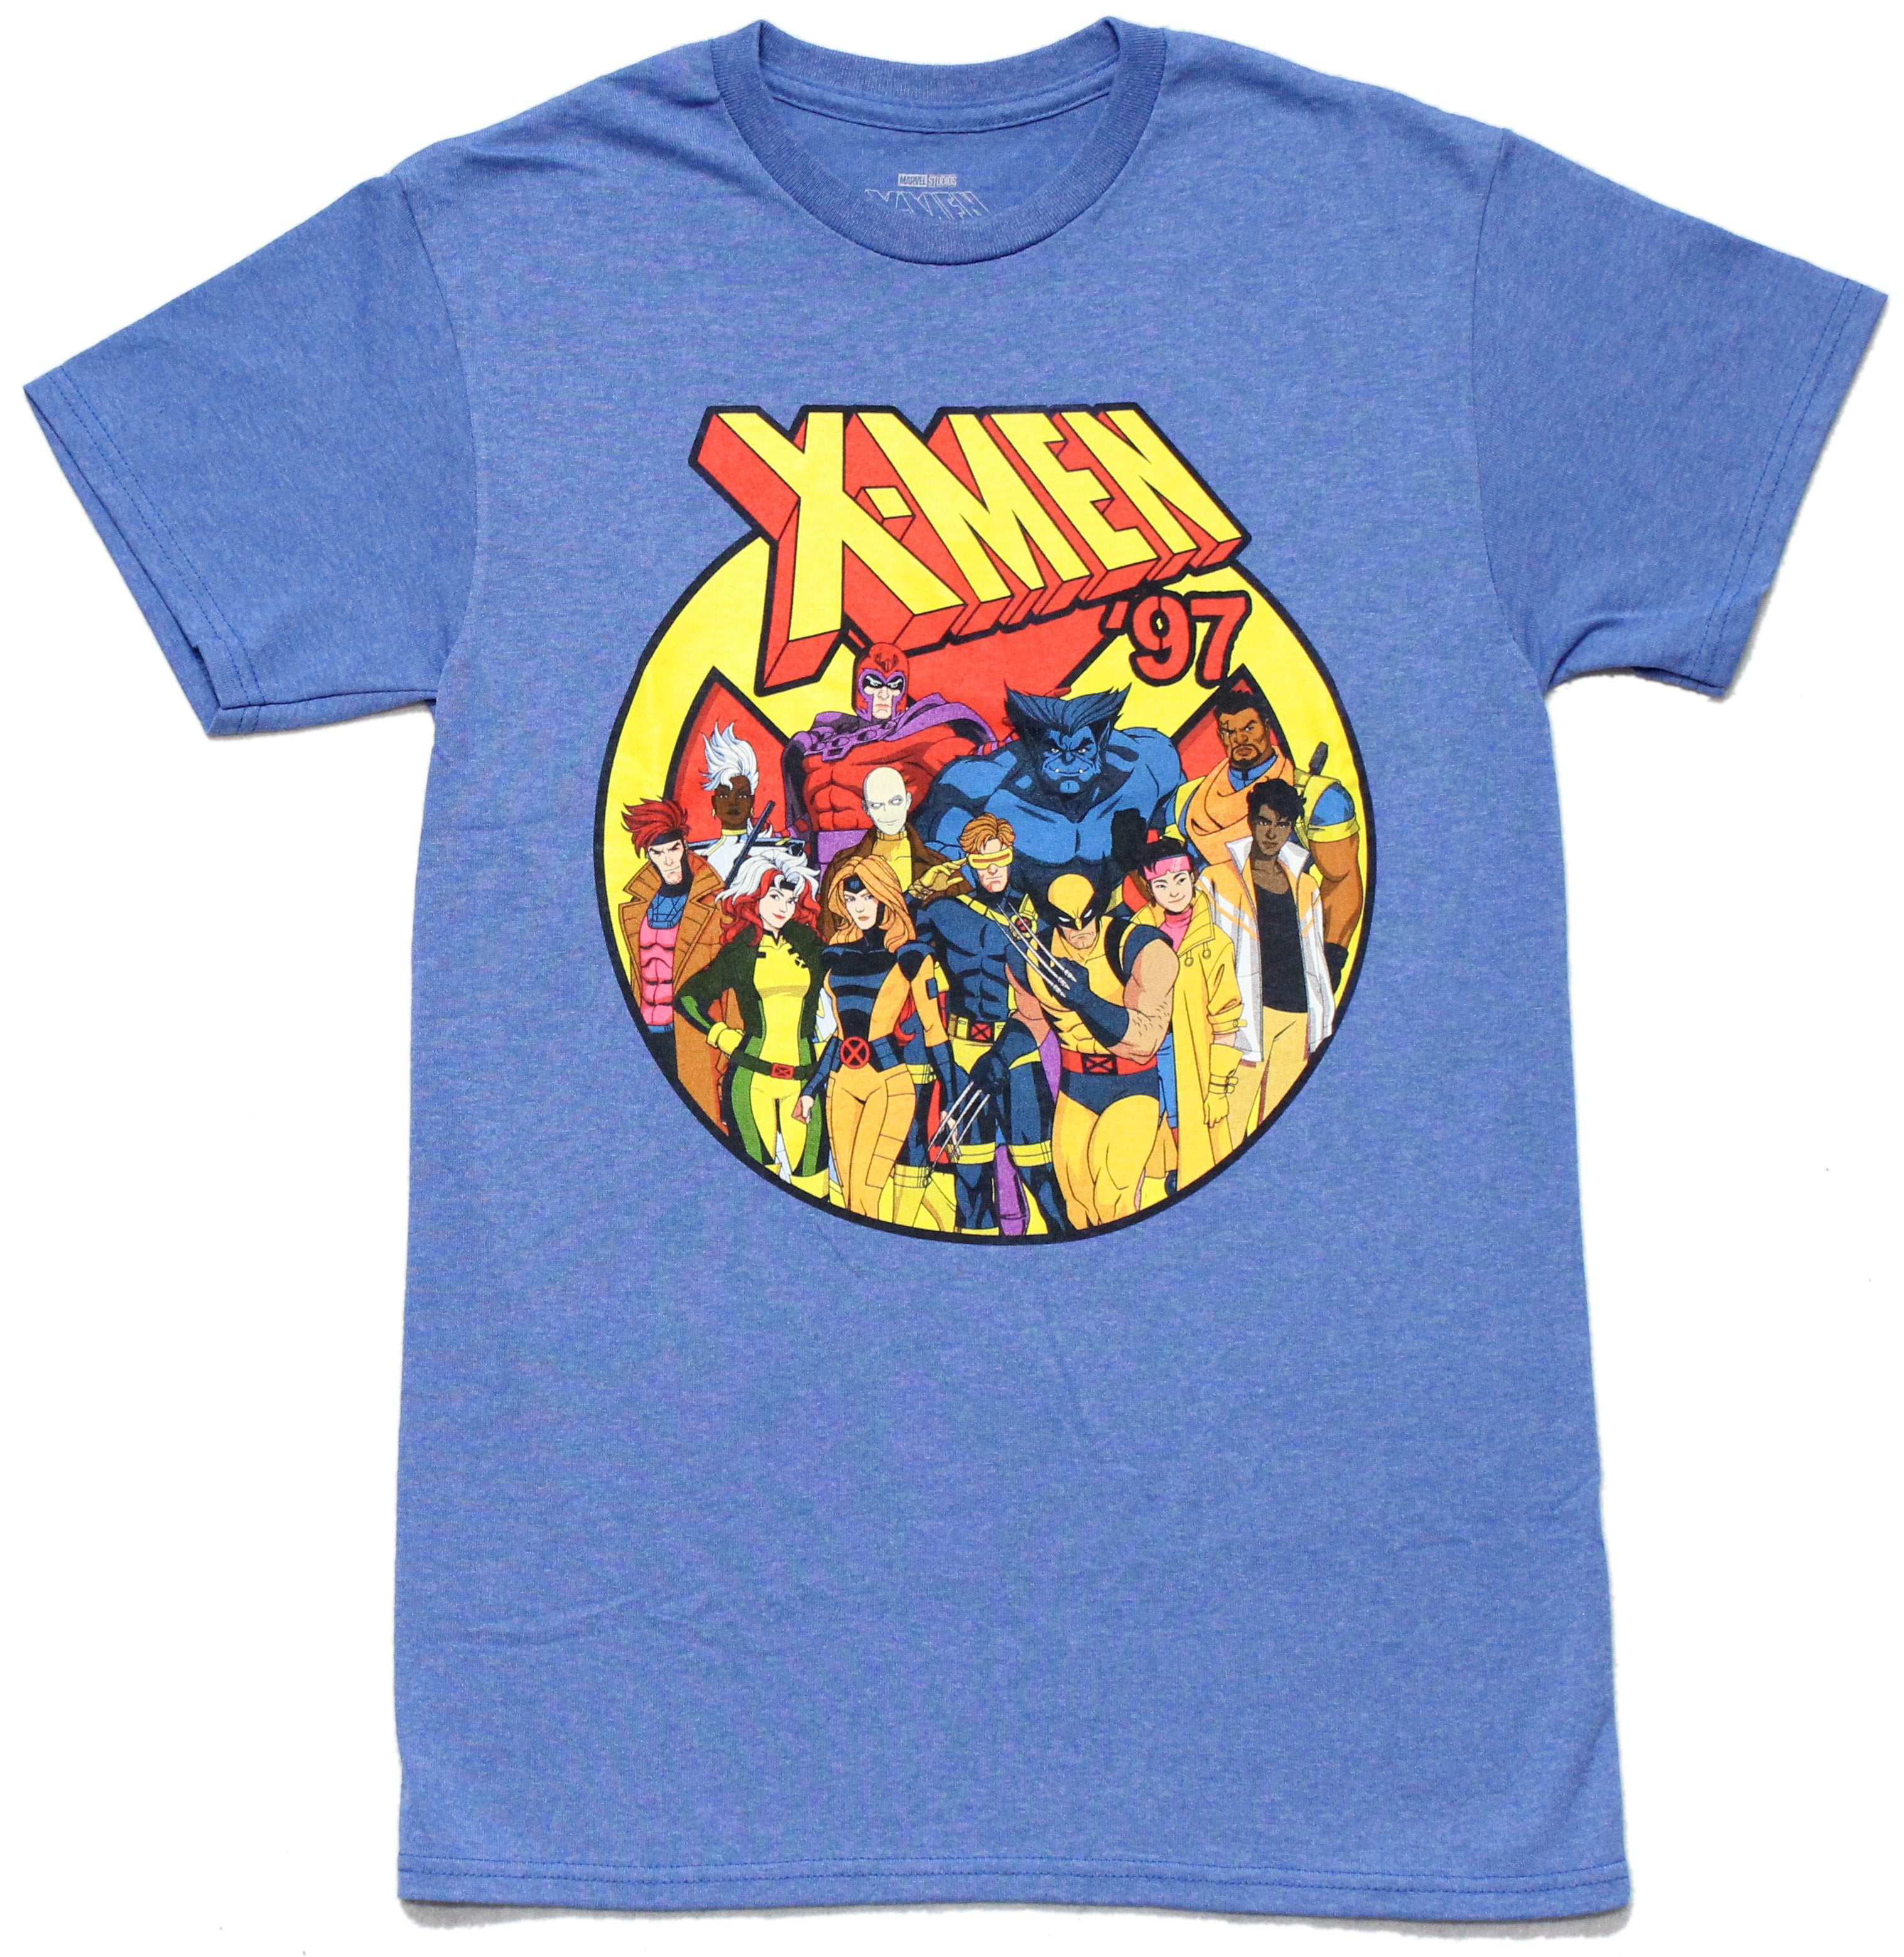 X-Men '97 Mens T-Shirt - Retro Cast In Yellow Circle